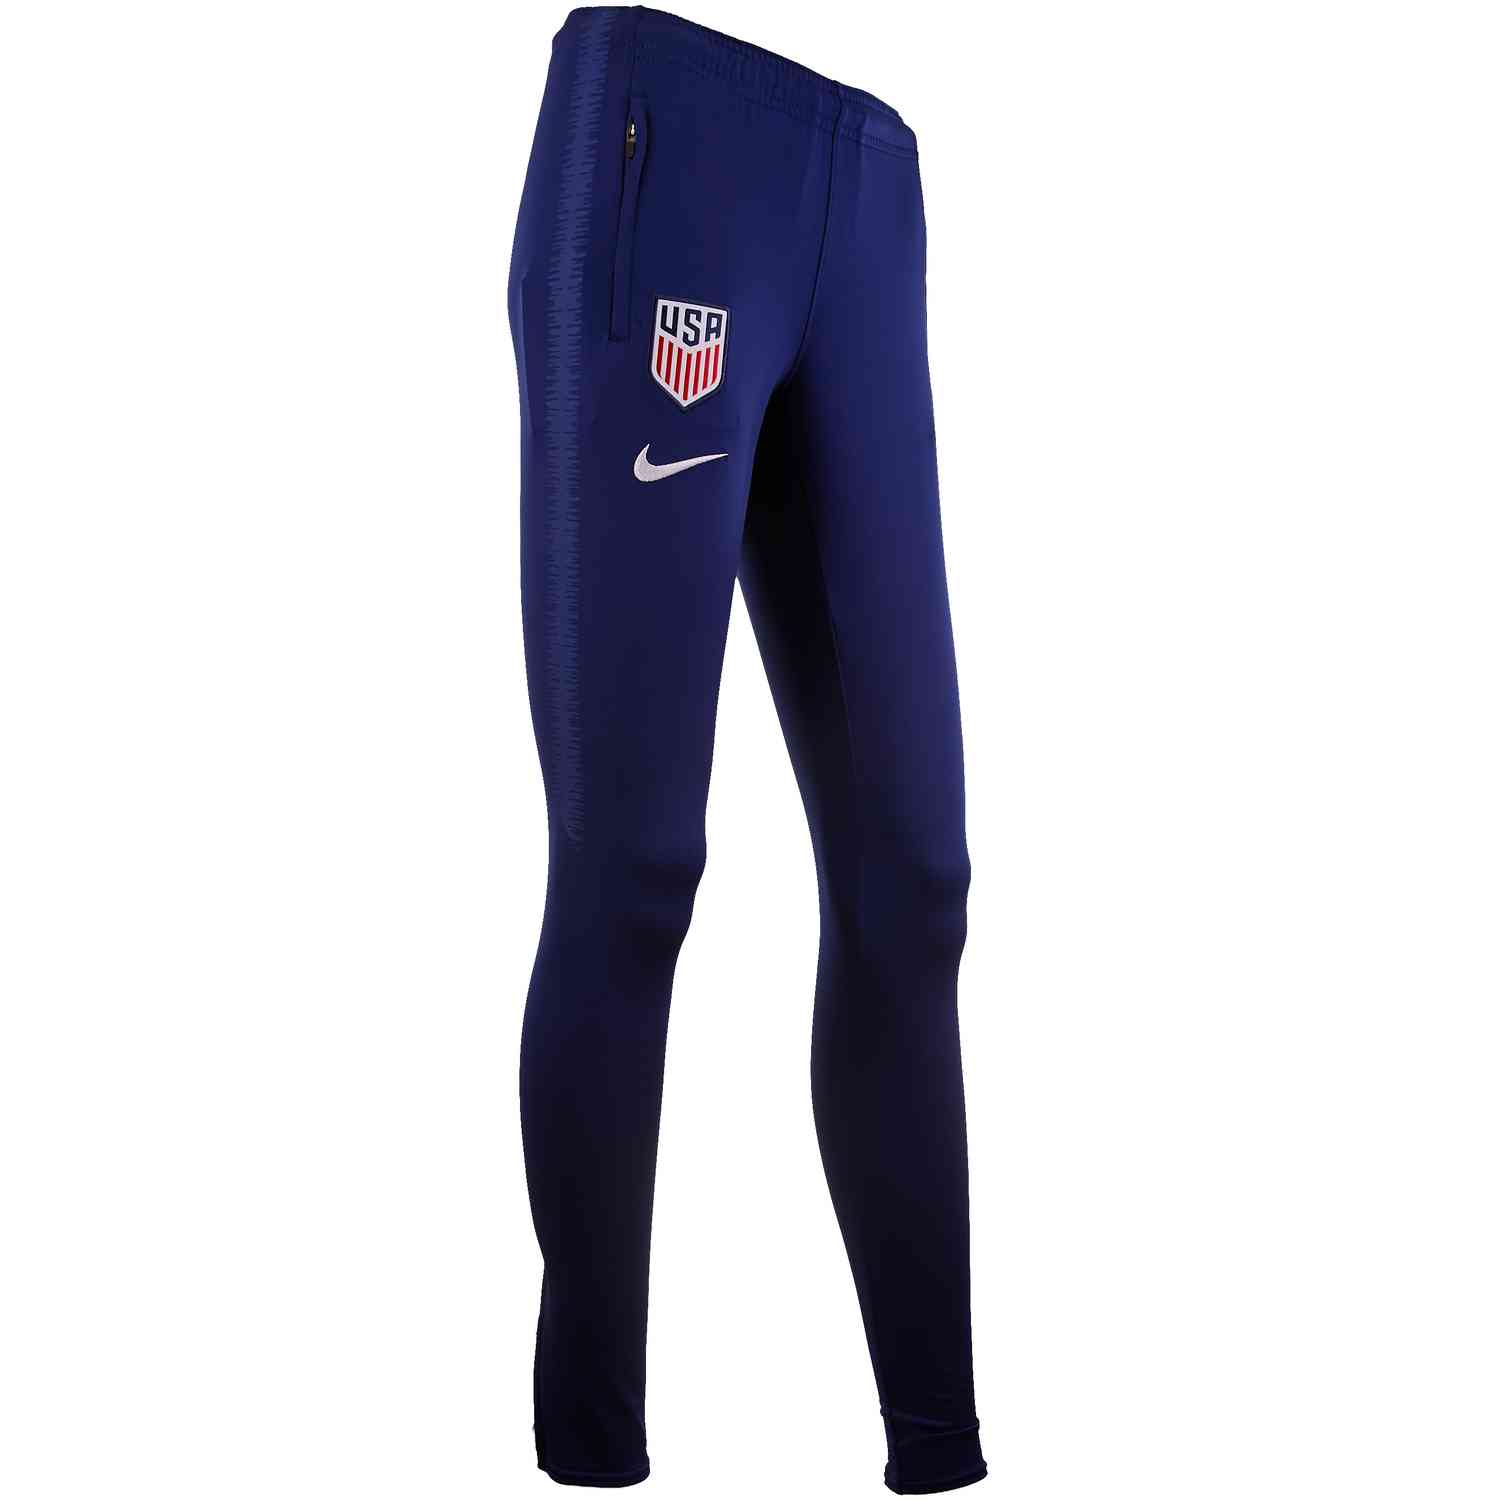 Womens Nike USWNT Training Pants - Loyal Blue - Soccer Master